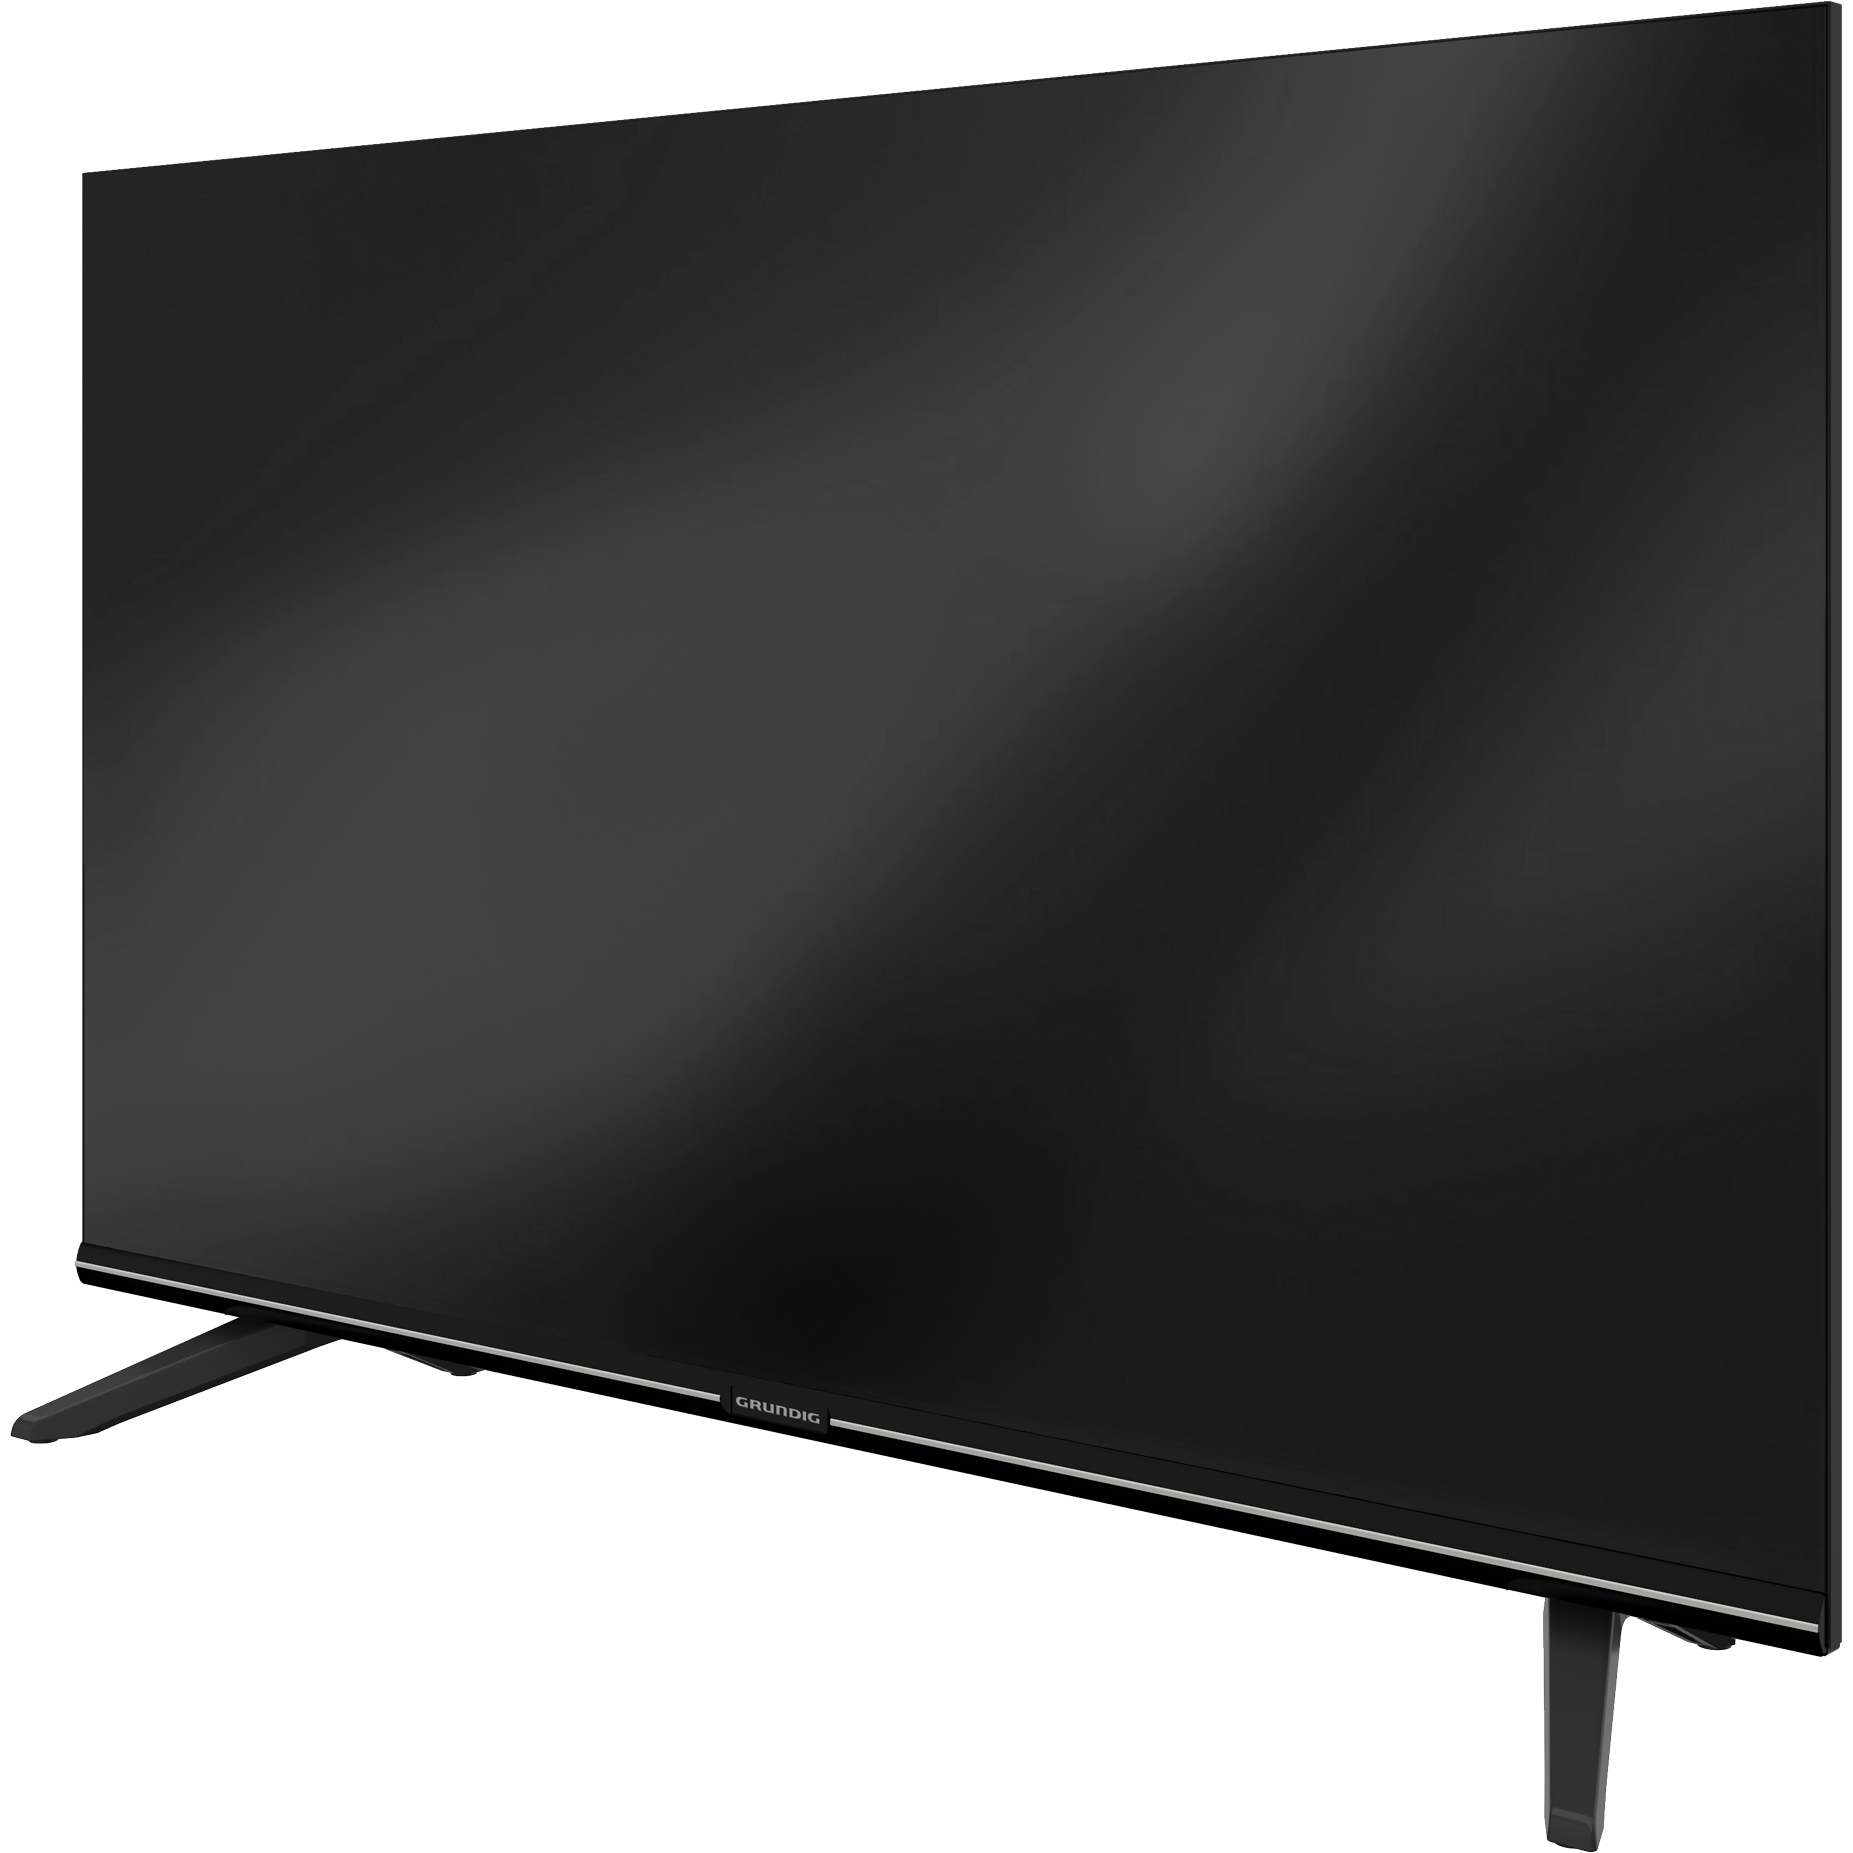 Телевизор Grundig 32GGH6900B, цвет черный - фото 4